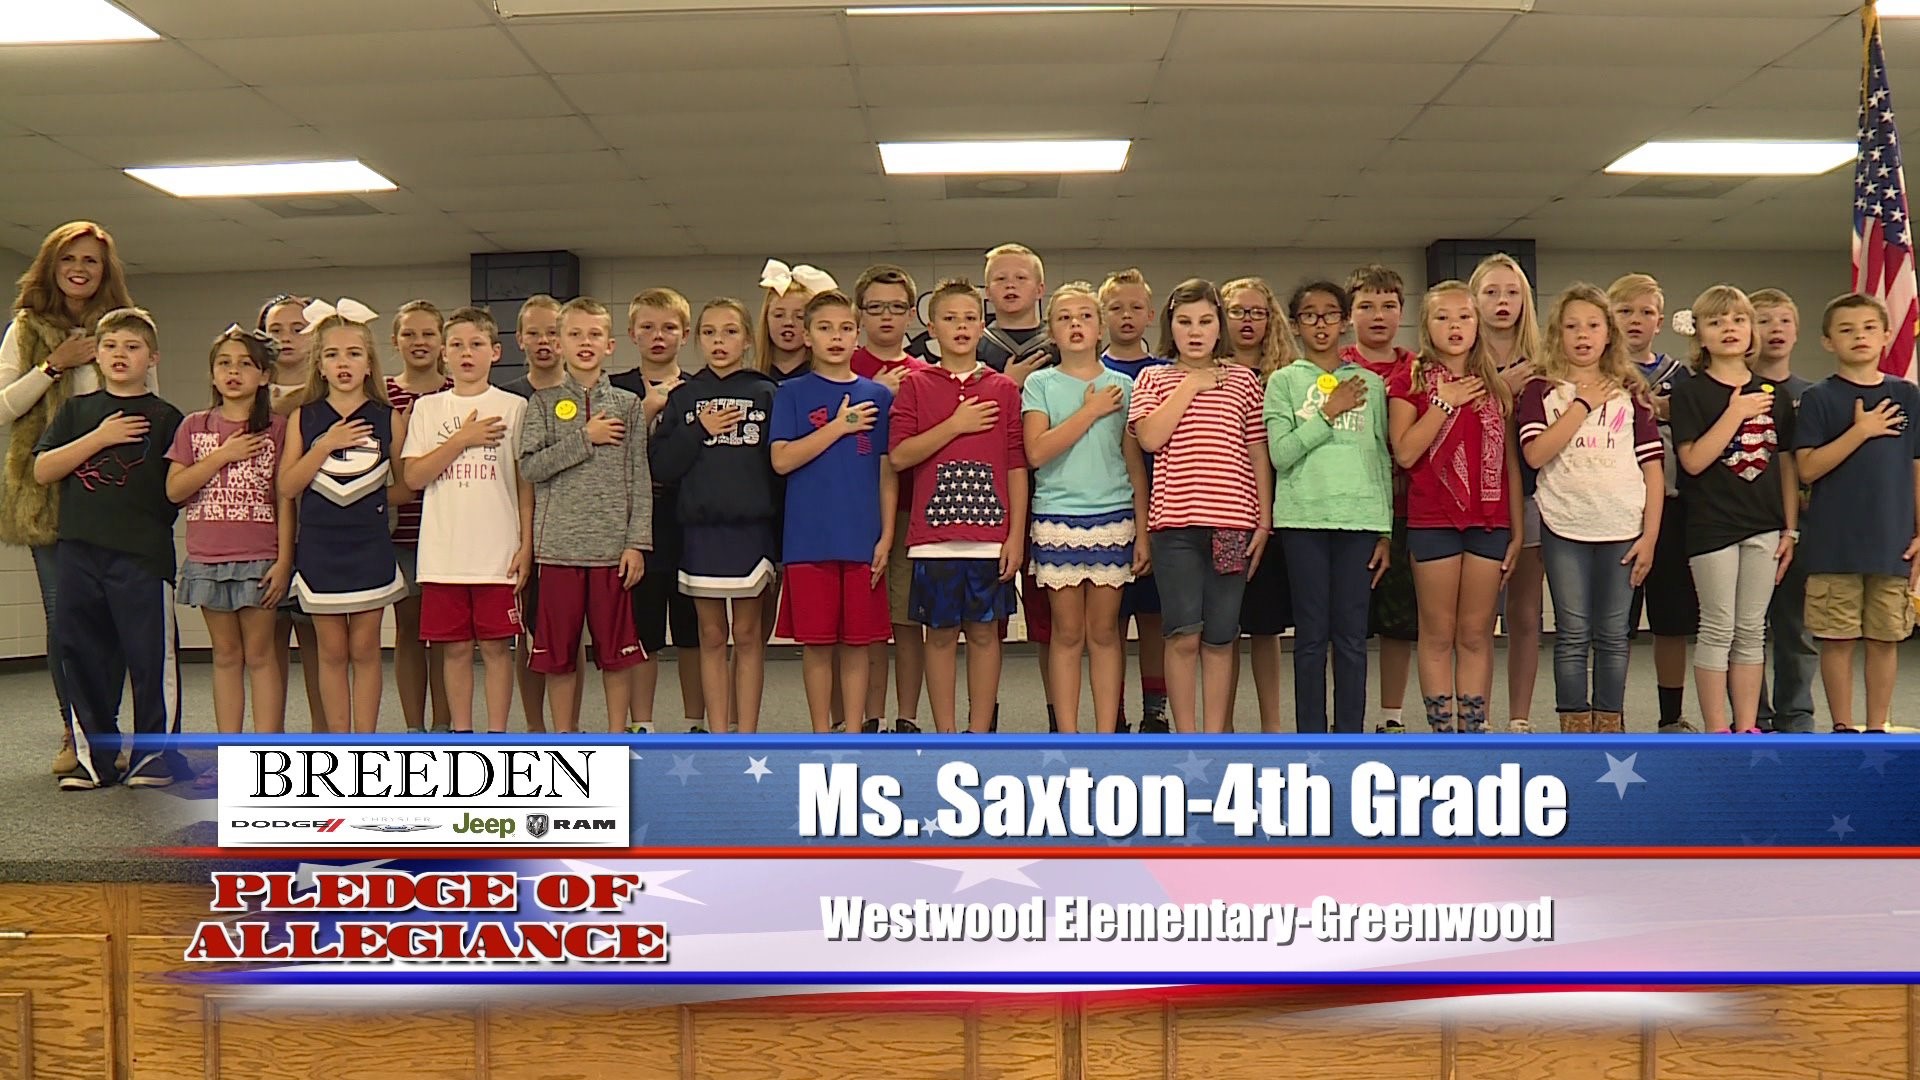 Ms. Saxton  4th Grade  Westwood Elementary - Greenwood